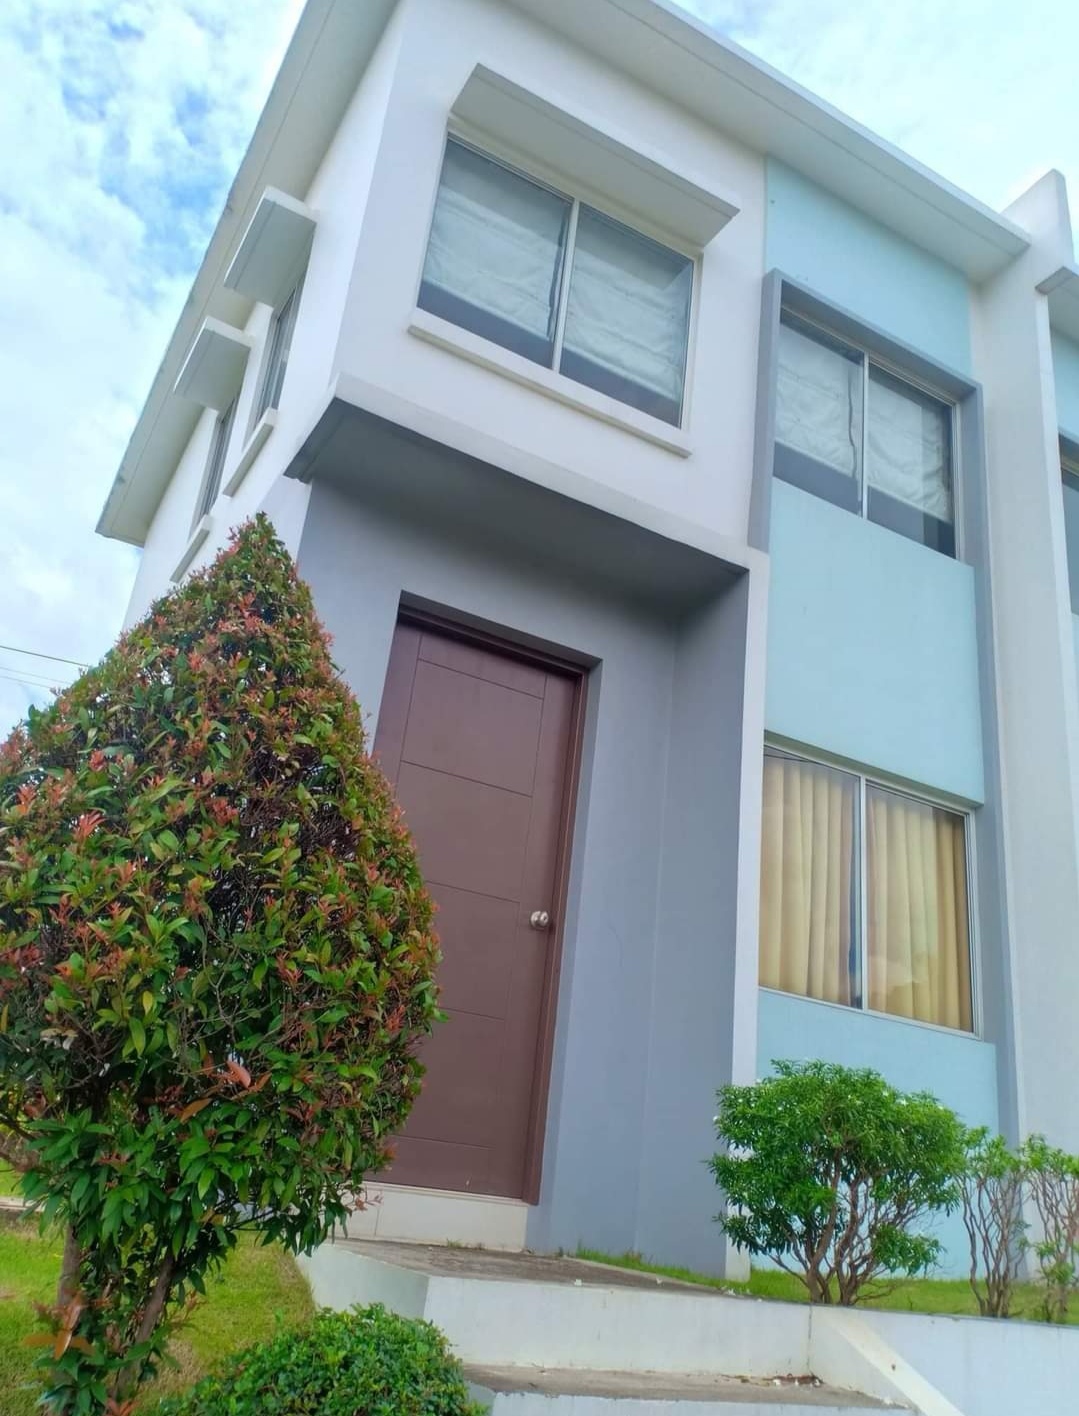 3 Bedroom House and Lot Opal at Manna East Teresa Rizal